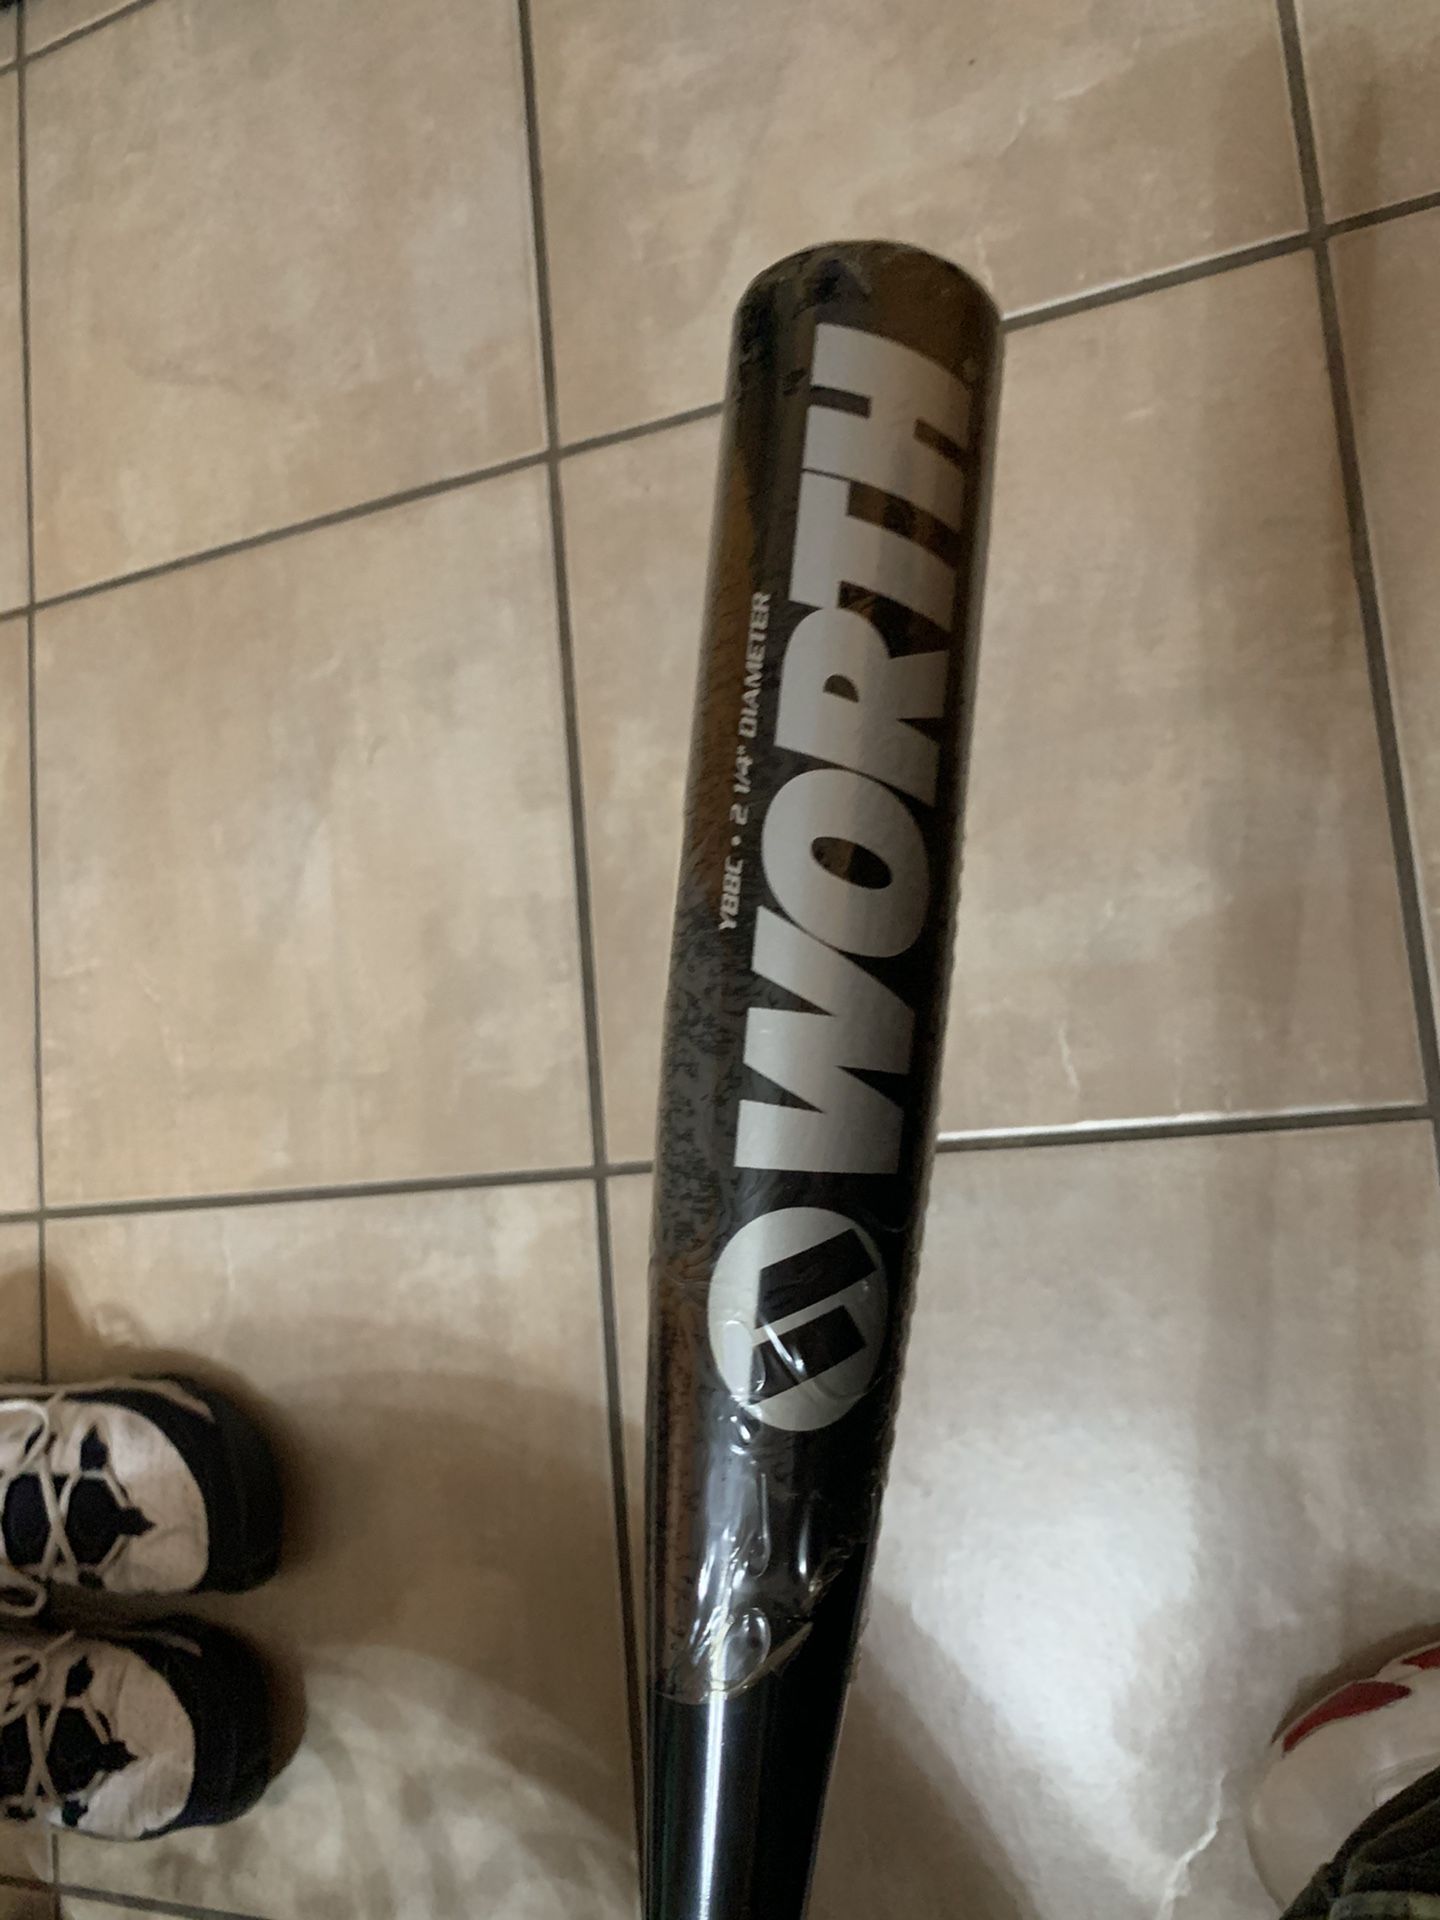 Baseball bat “worth”